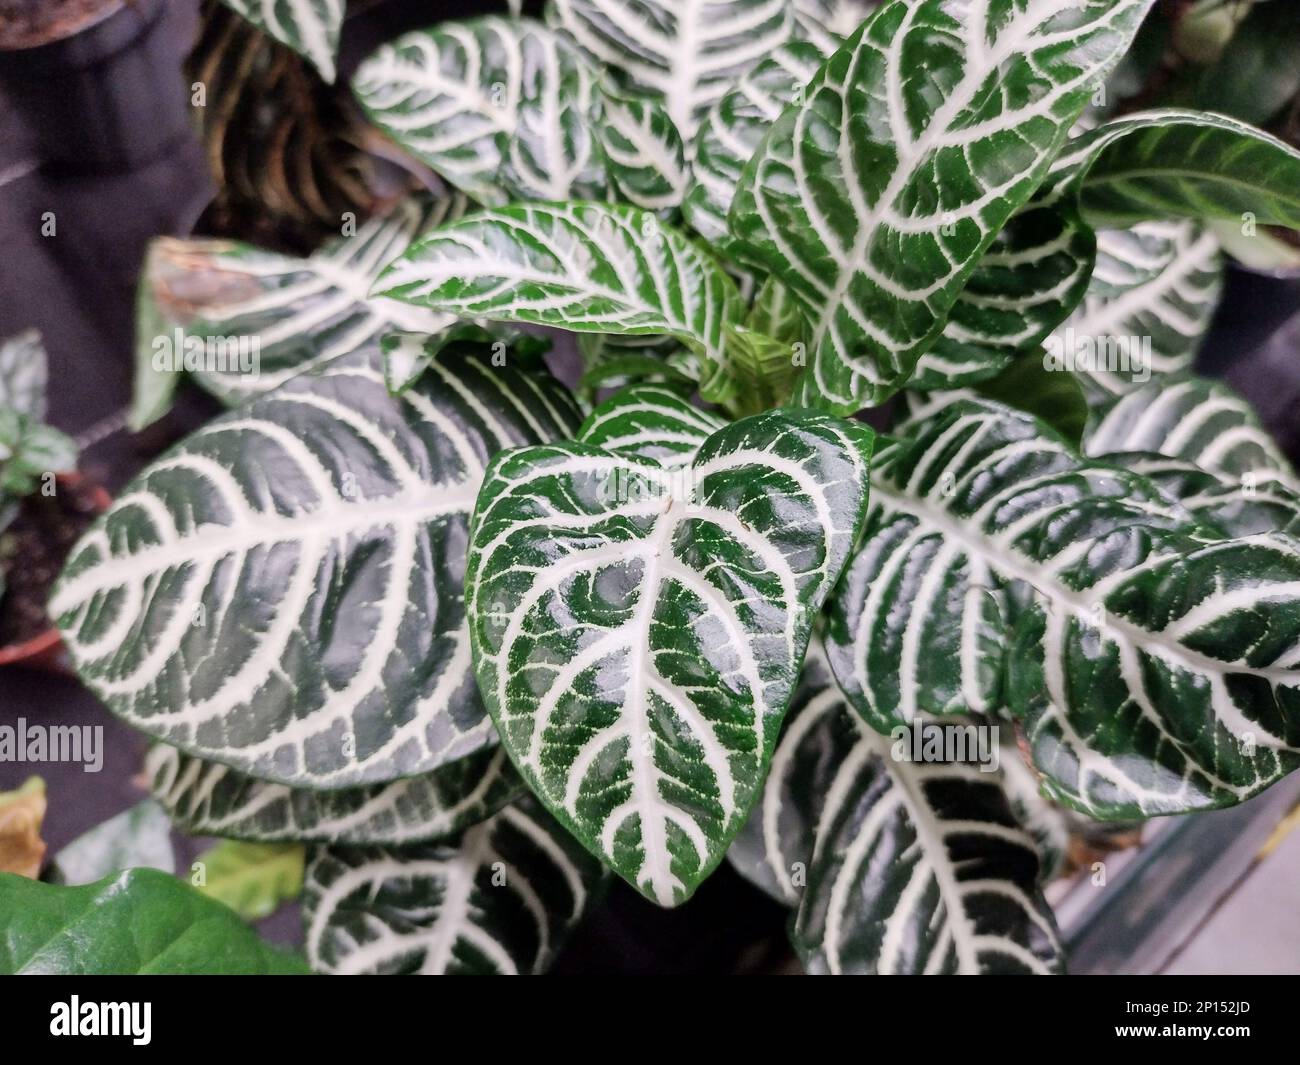 Zebraplant in the pot. Aphelandra squarrosa plant Stock Photo